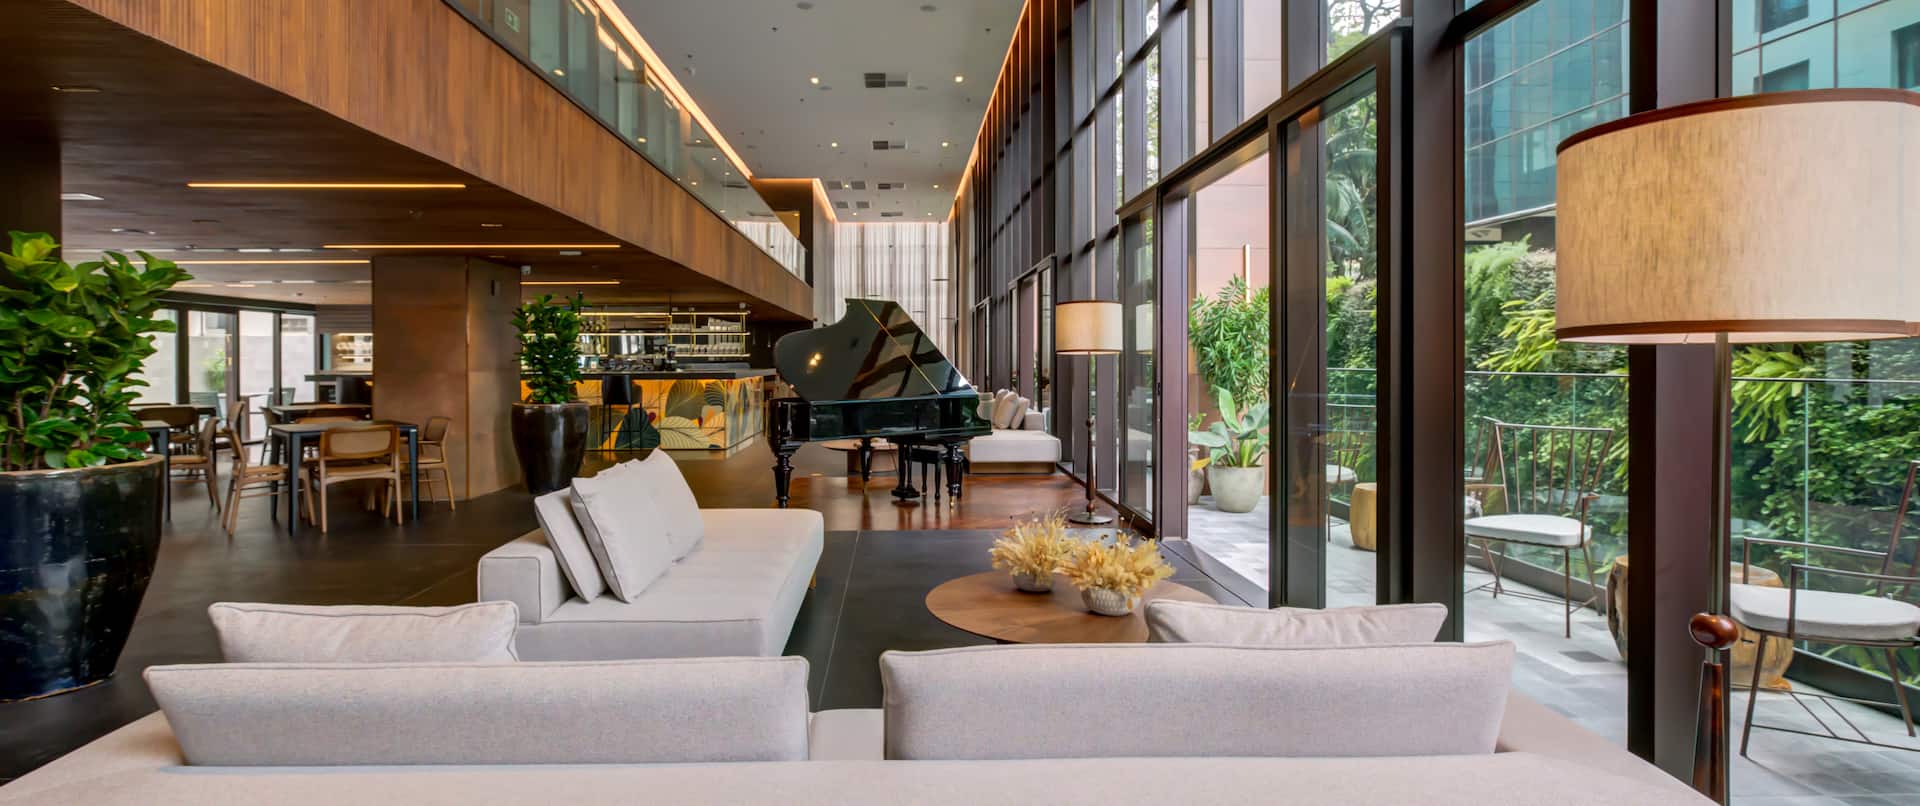 Lobby sofa seating and piano